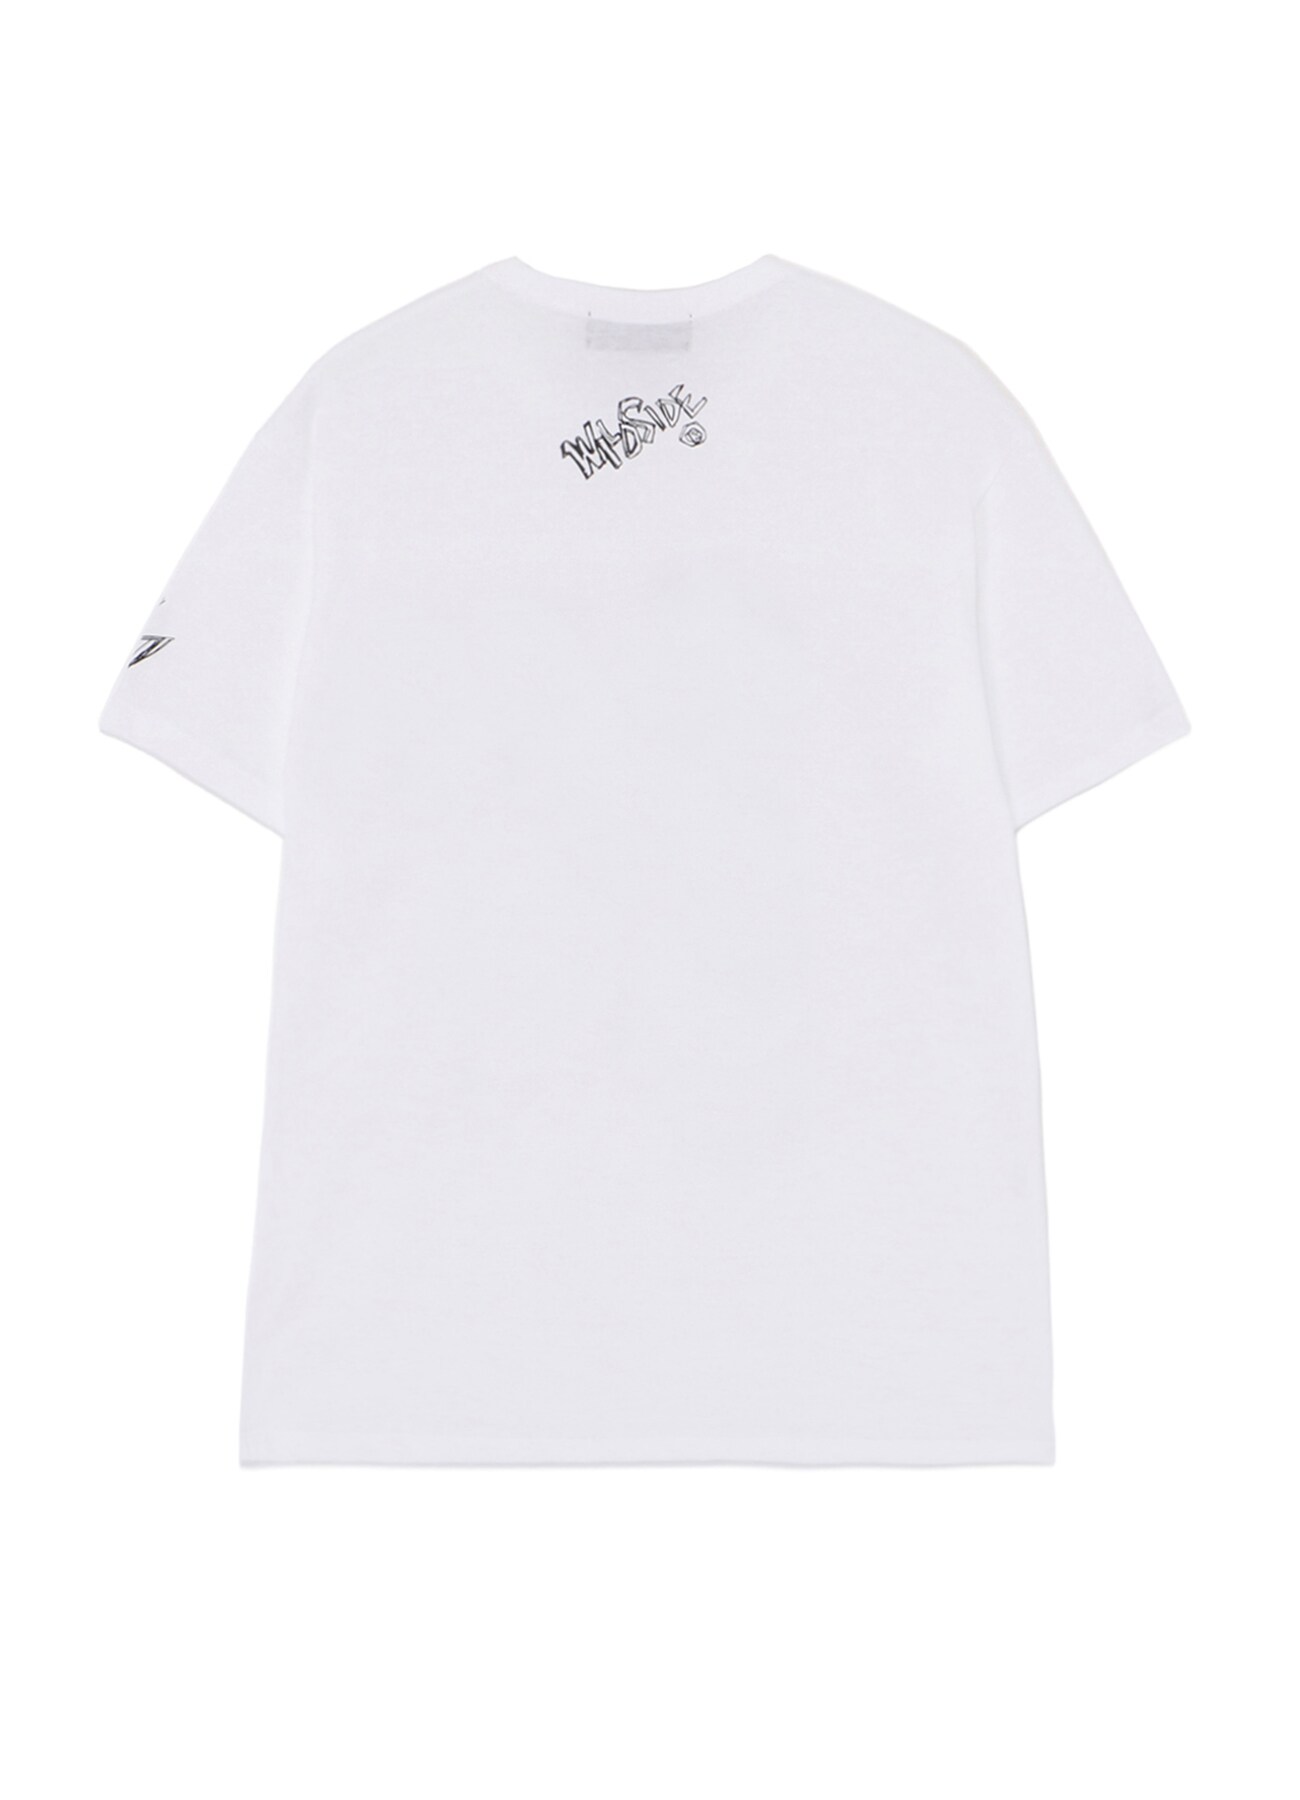 MAIKO T-shirt (WHITE)